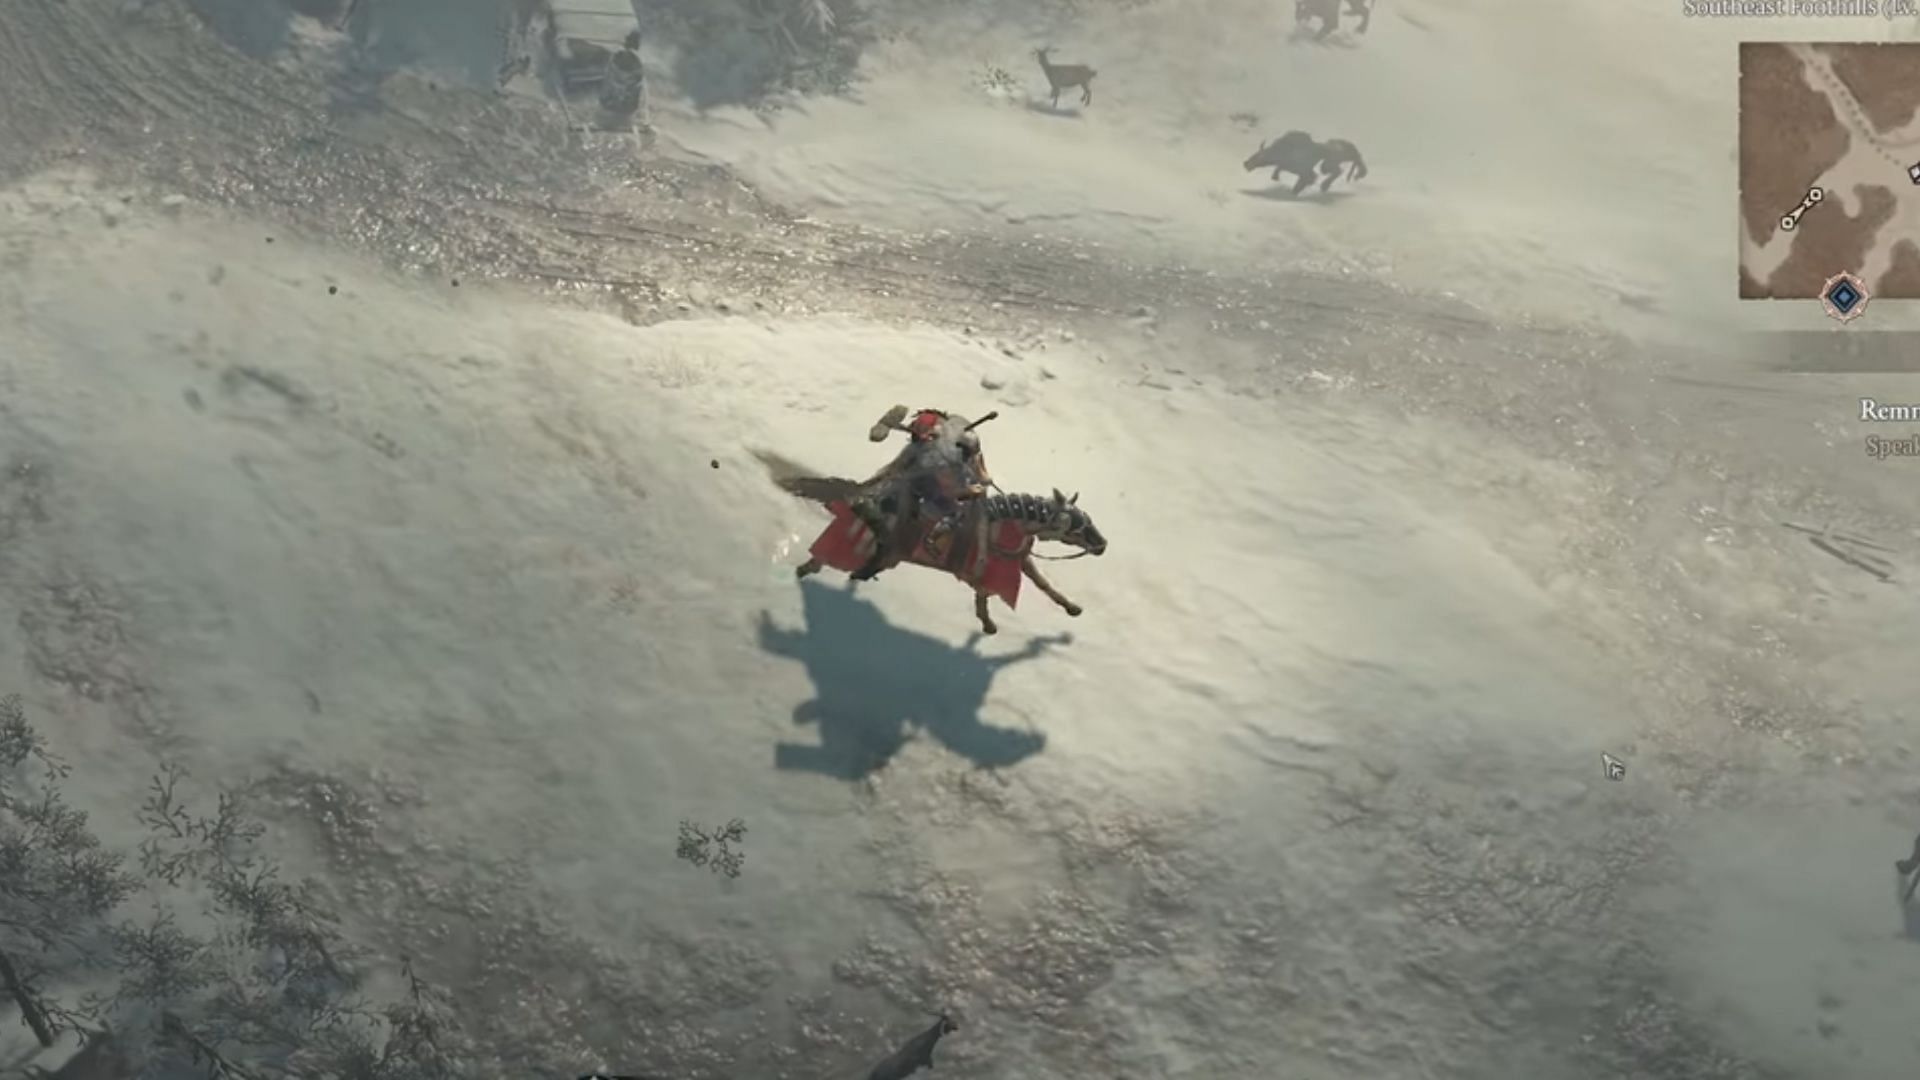 Diablo 4 introduces Mounts, enabling players to traverse different regions easily (Image via Blizzard Entertainment)